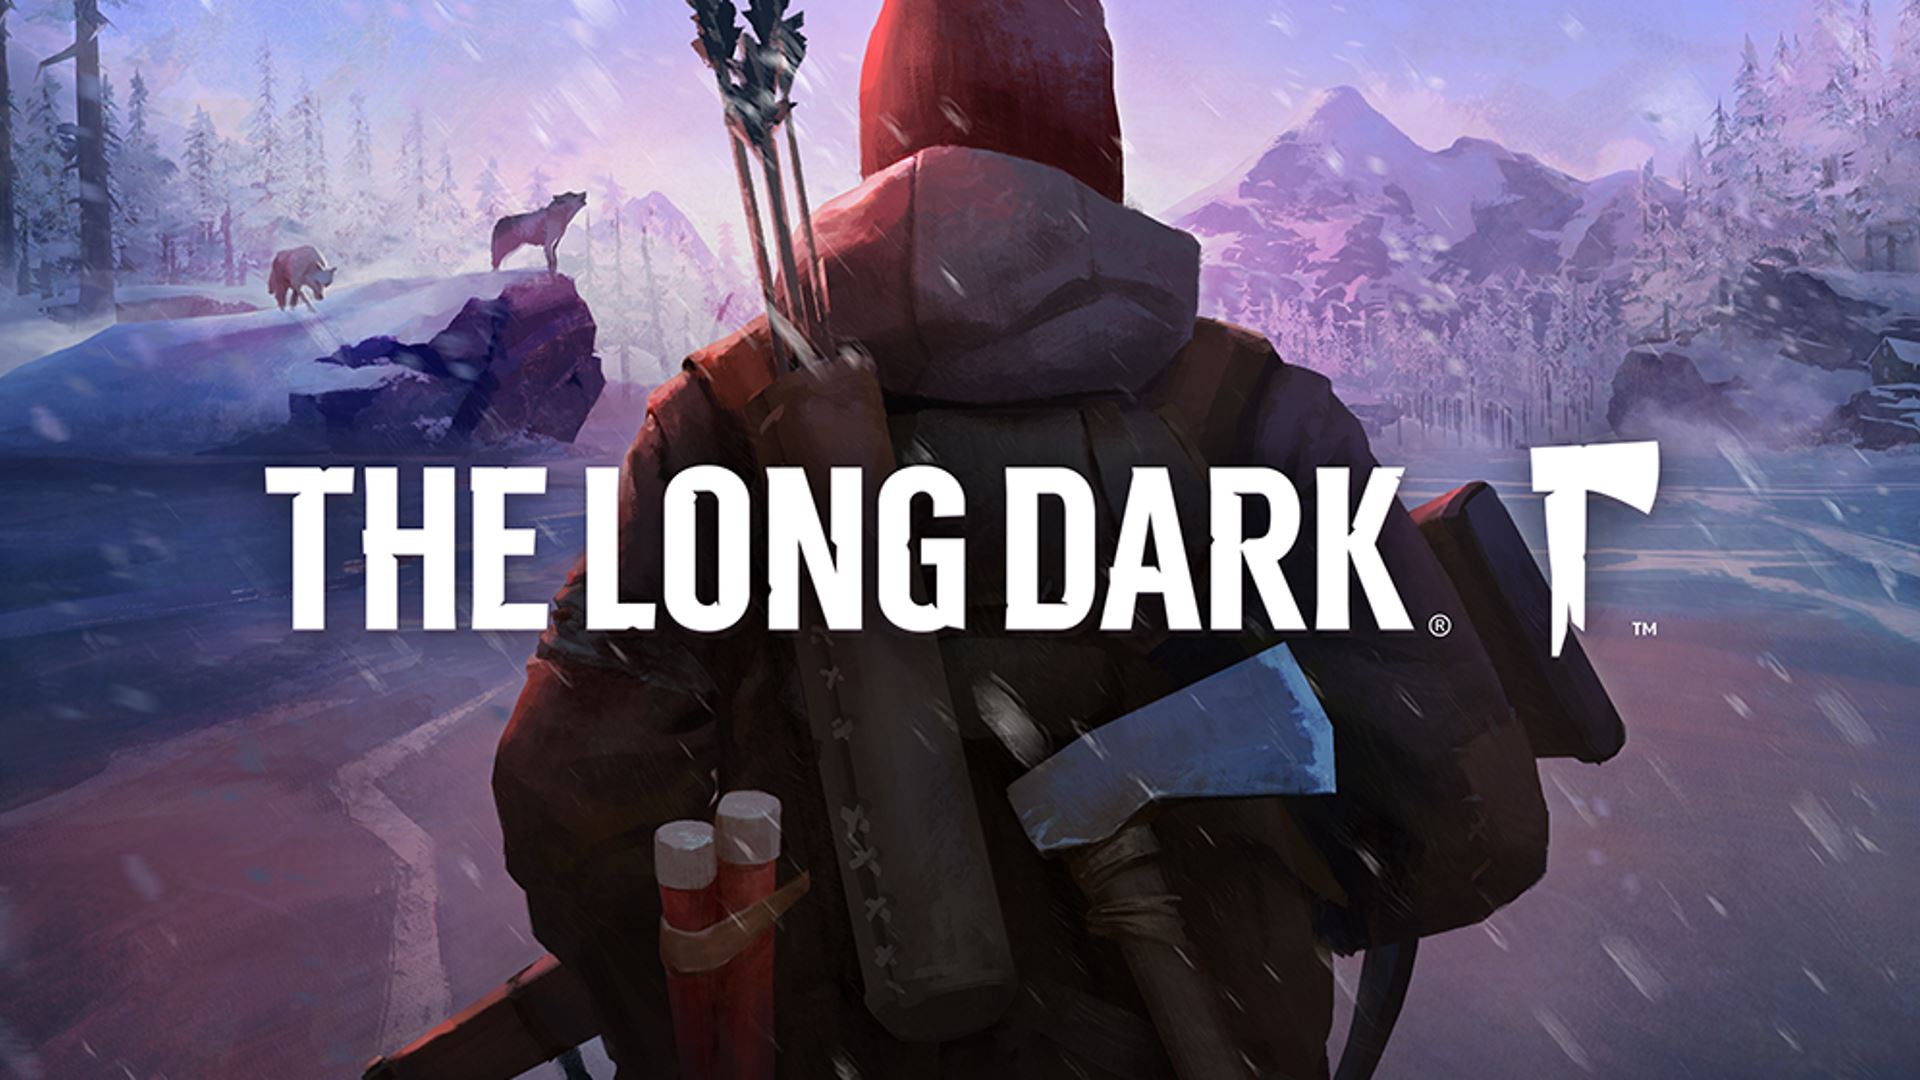 Play games #4: The Long Dark